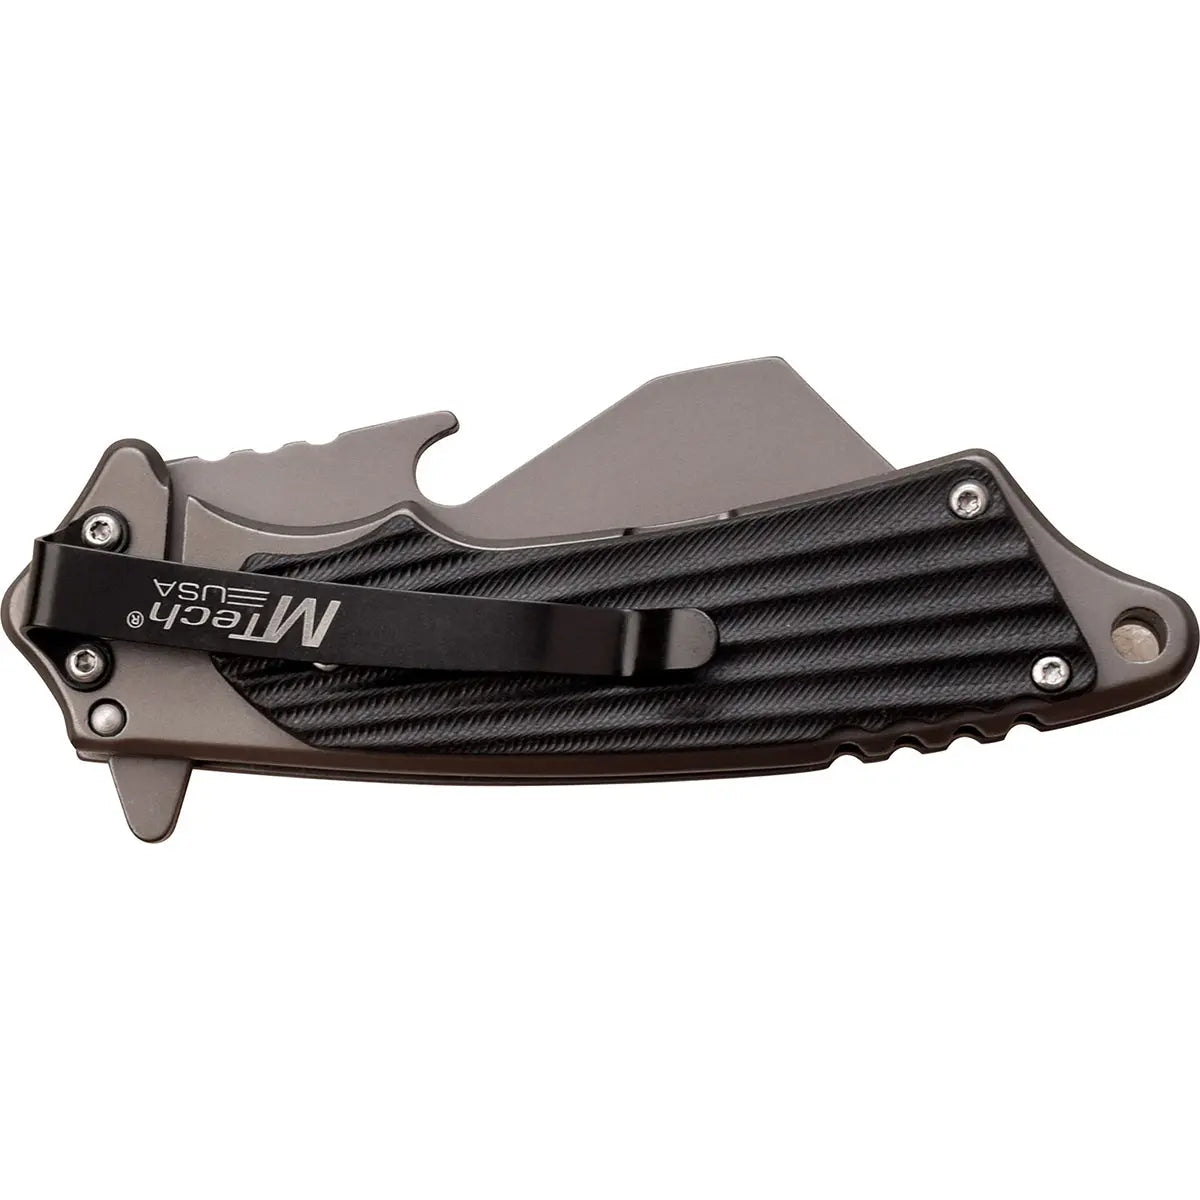 MTech USA Linerlock Spring Assisted Folding Knife, 3.25" Blade, MT-A1186GY M-Tech